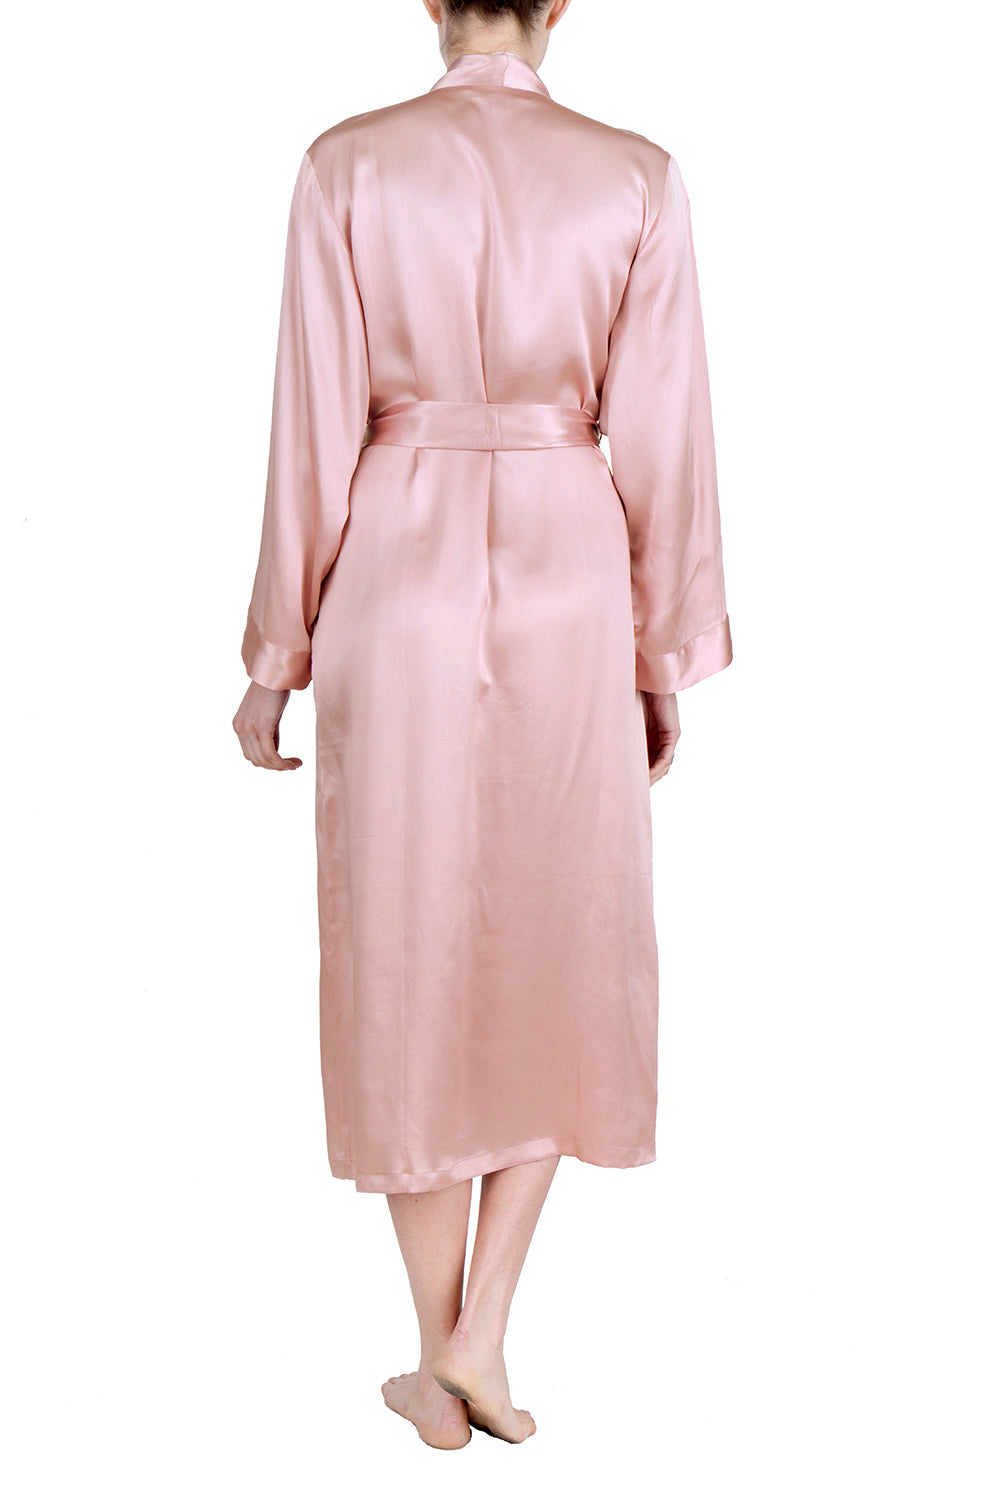 Women's Silk Sleepwear 100% Silk Long Robe, Bridal Rose, L/XL